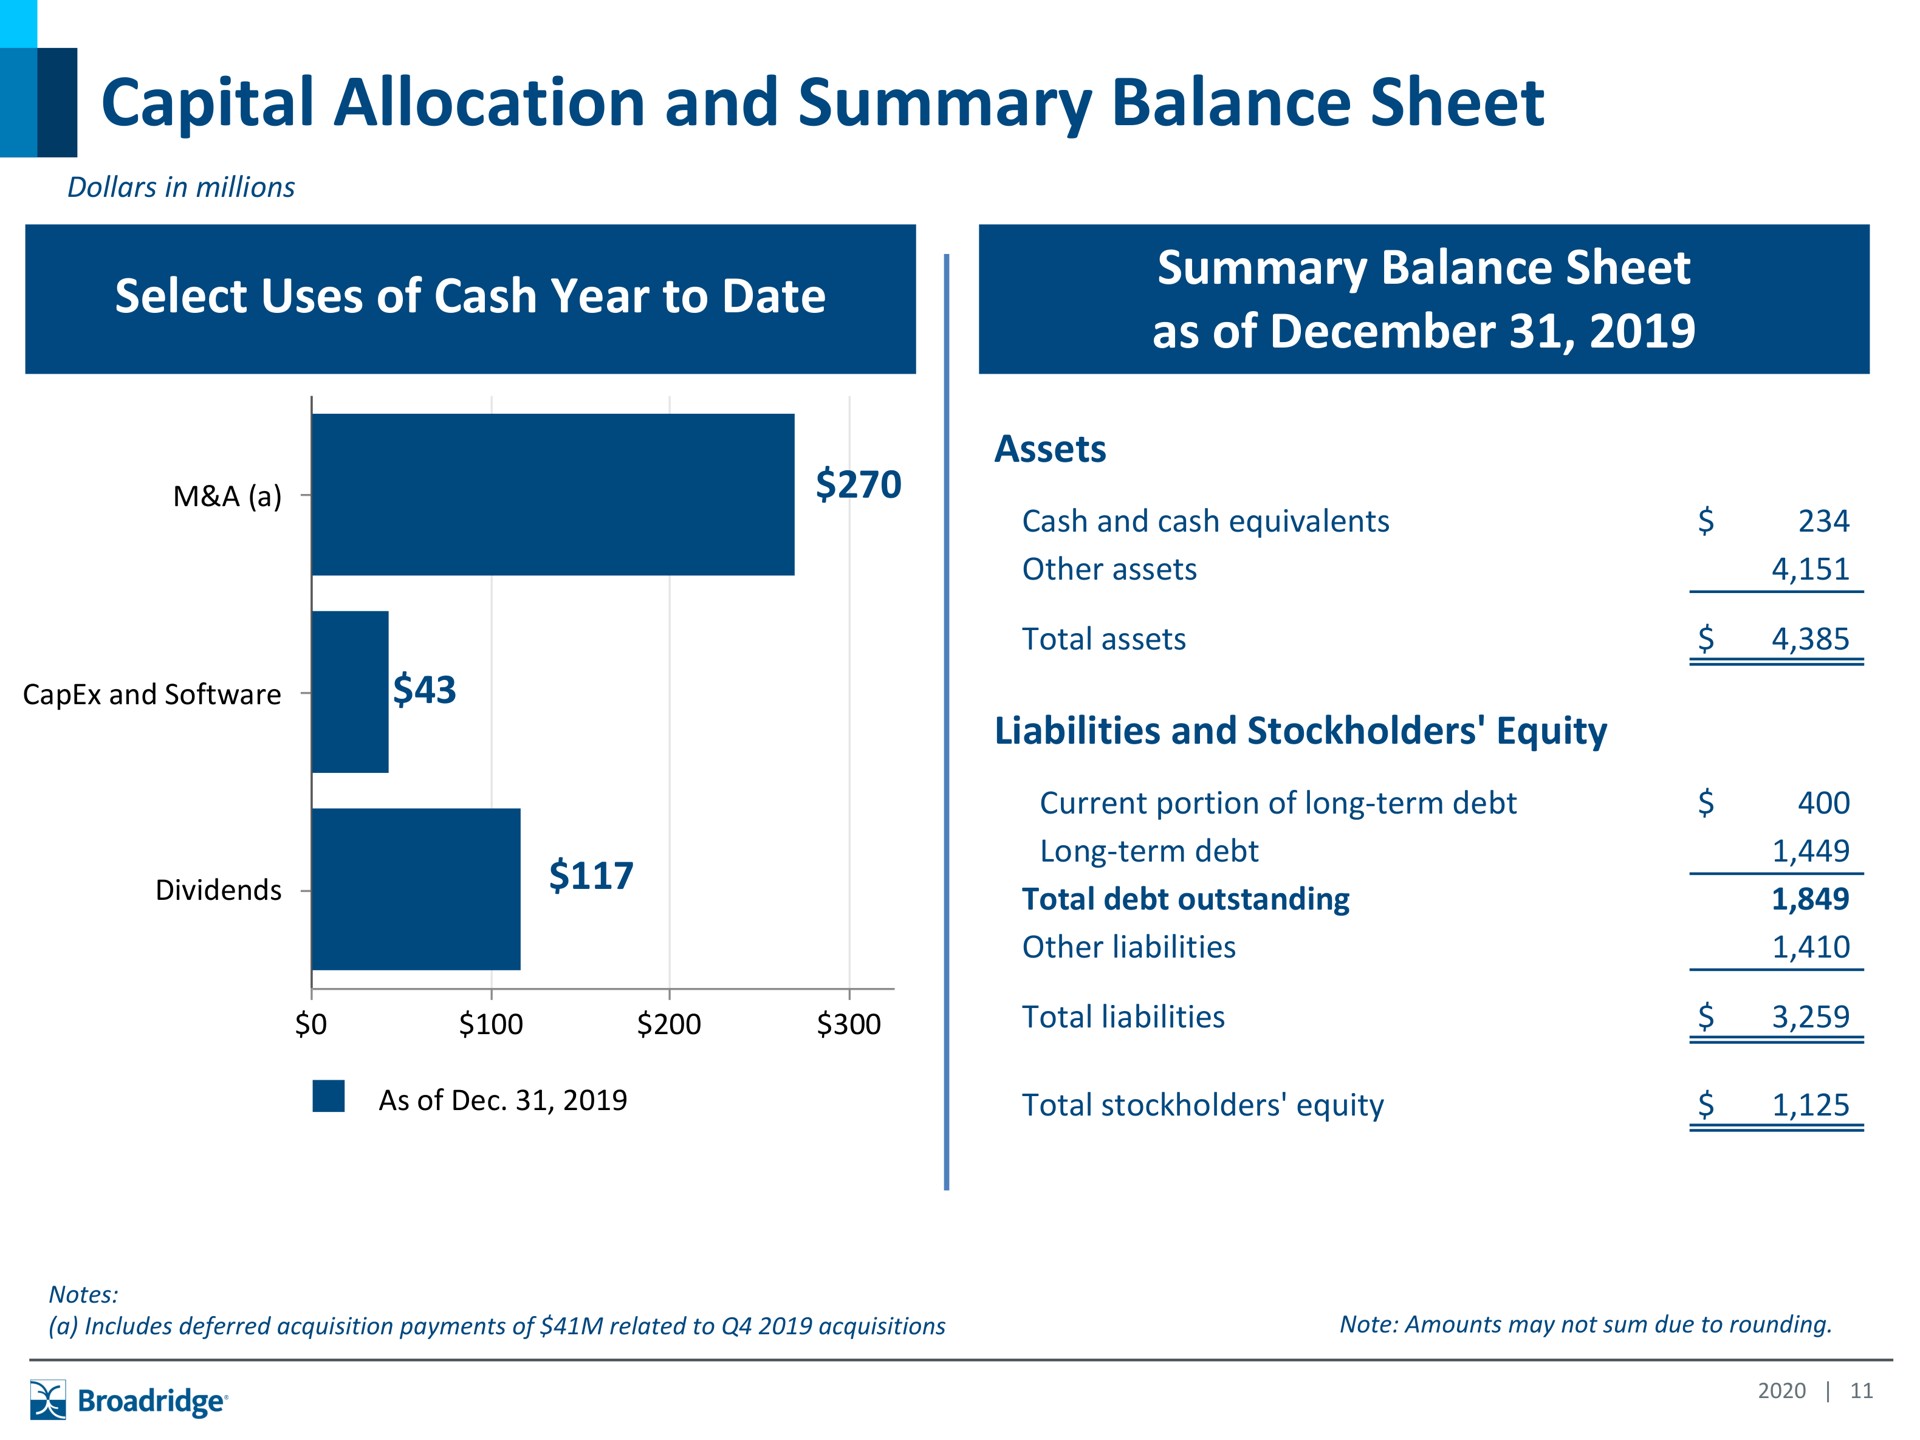 capital allocation and summary balance sheet | Broadridge Financial Solutions